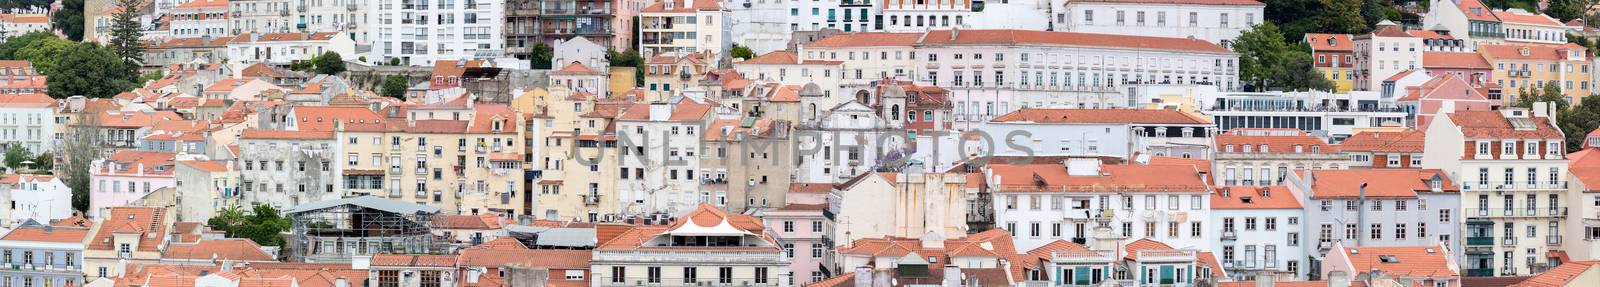 Lisbon cityscape Portugal by vichie81